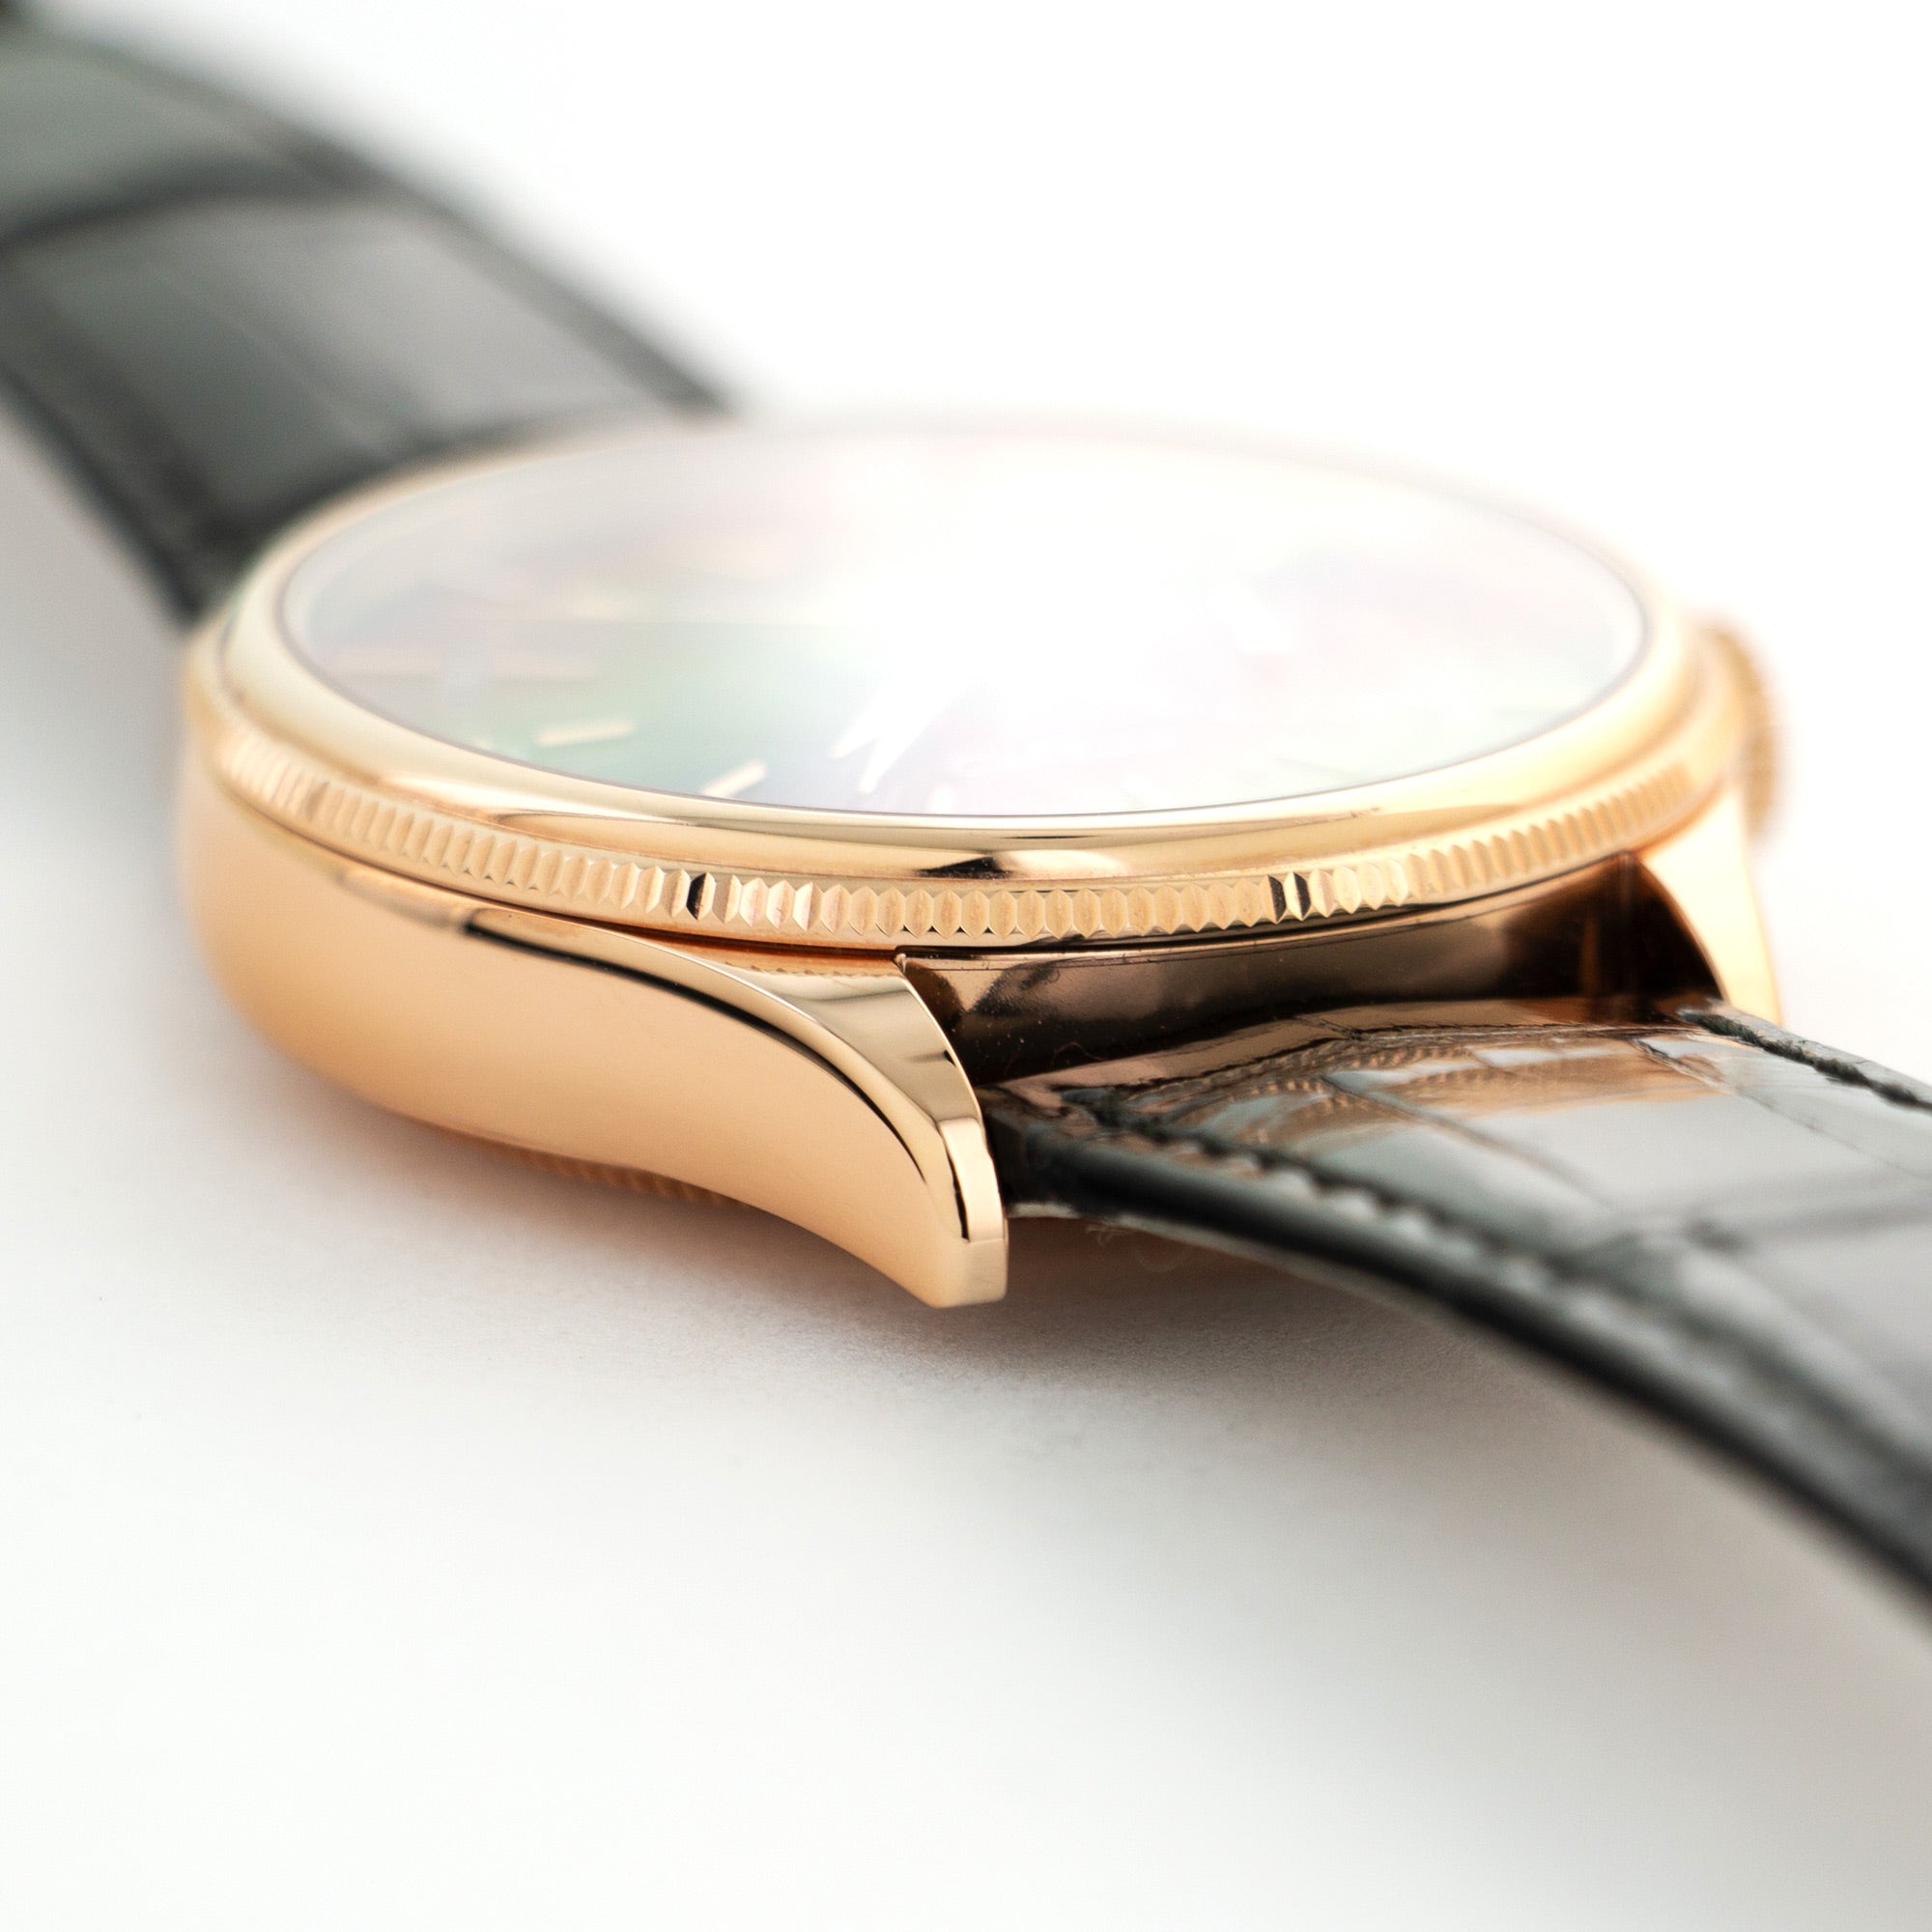 Rolex - Rolex Rose Gold Cellini Strap Watch Ref. 50515 - The Keystone Watches